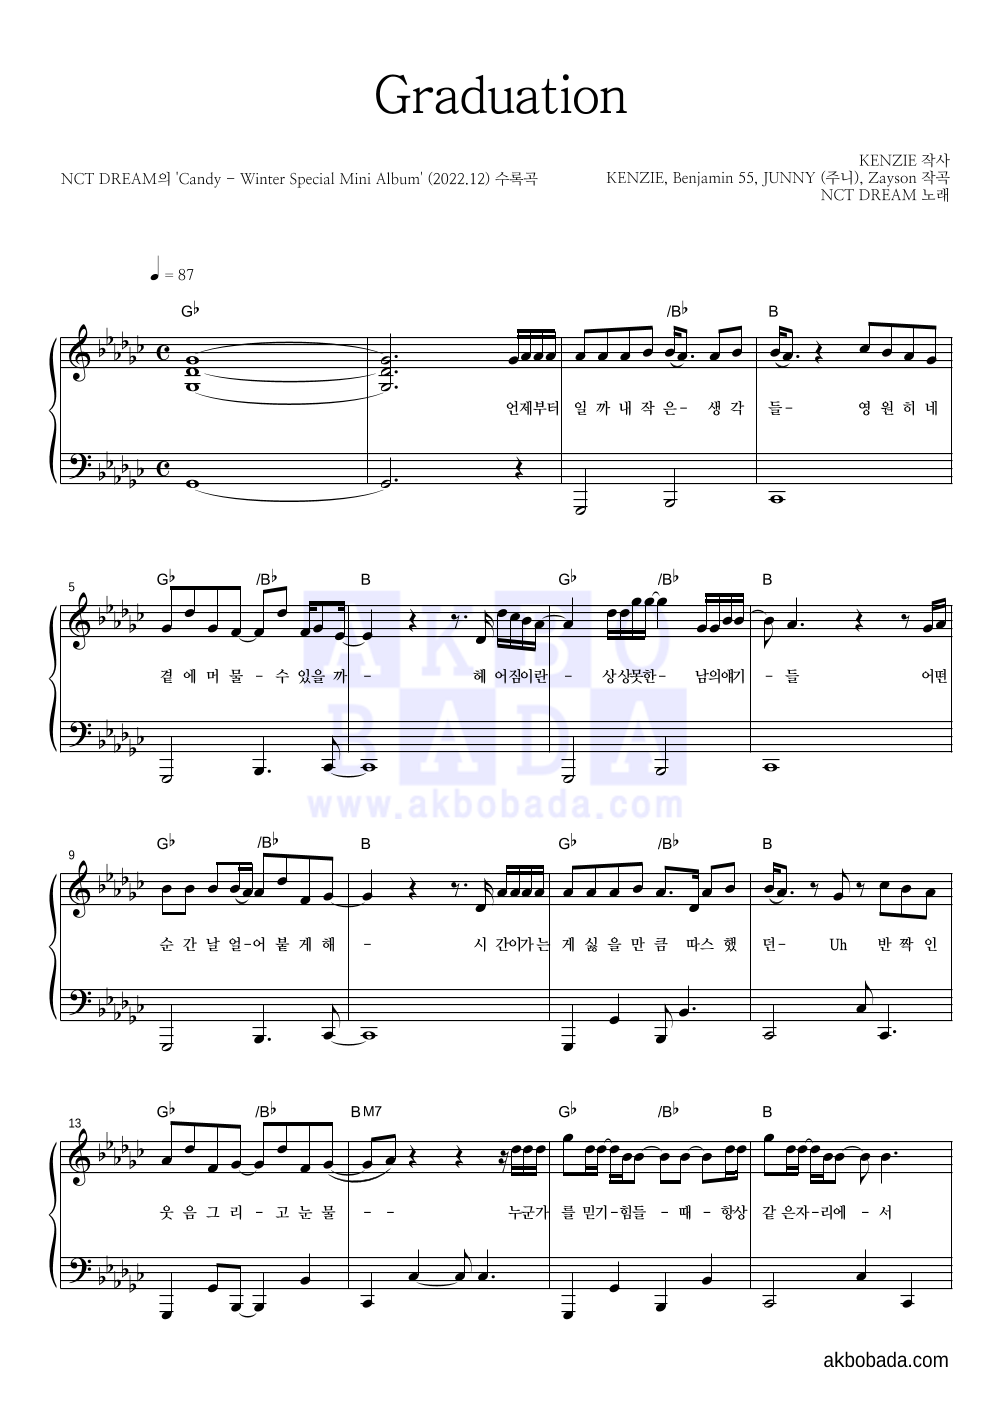 NCT DREAM - Graduation 피아노 2단 악보 